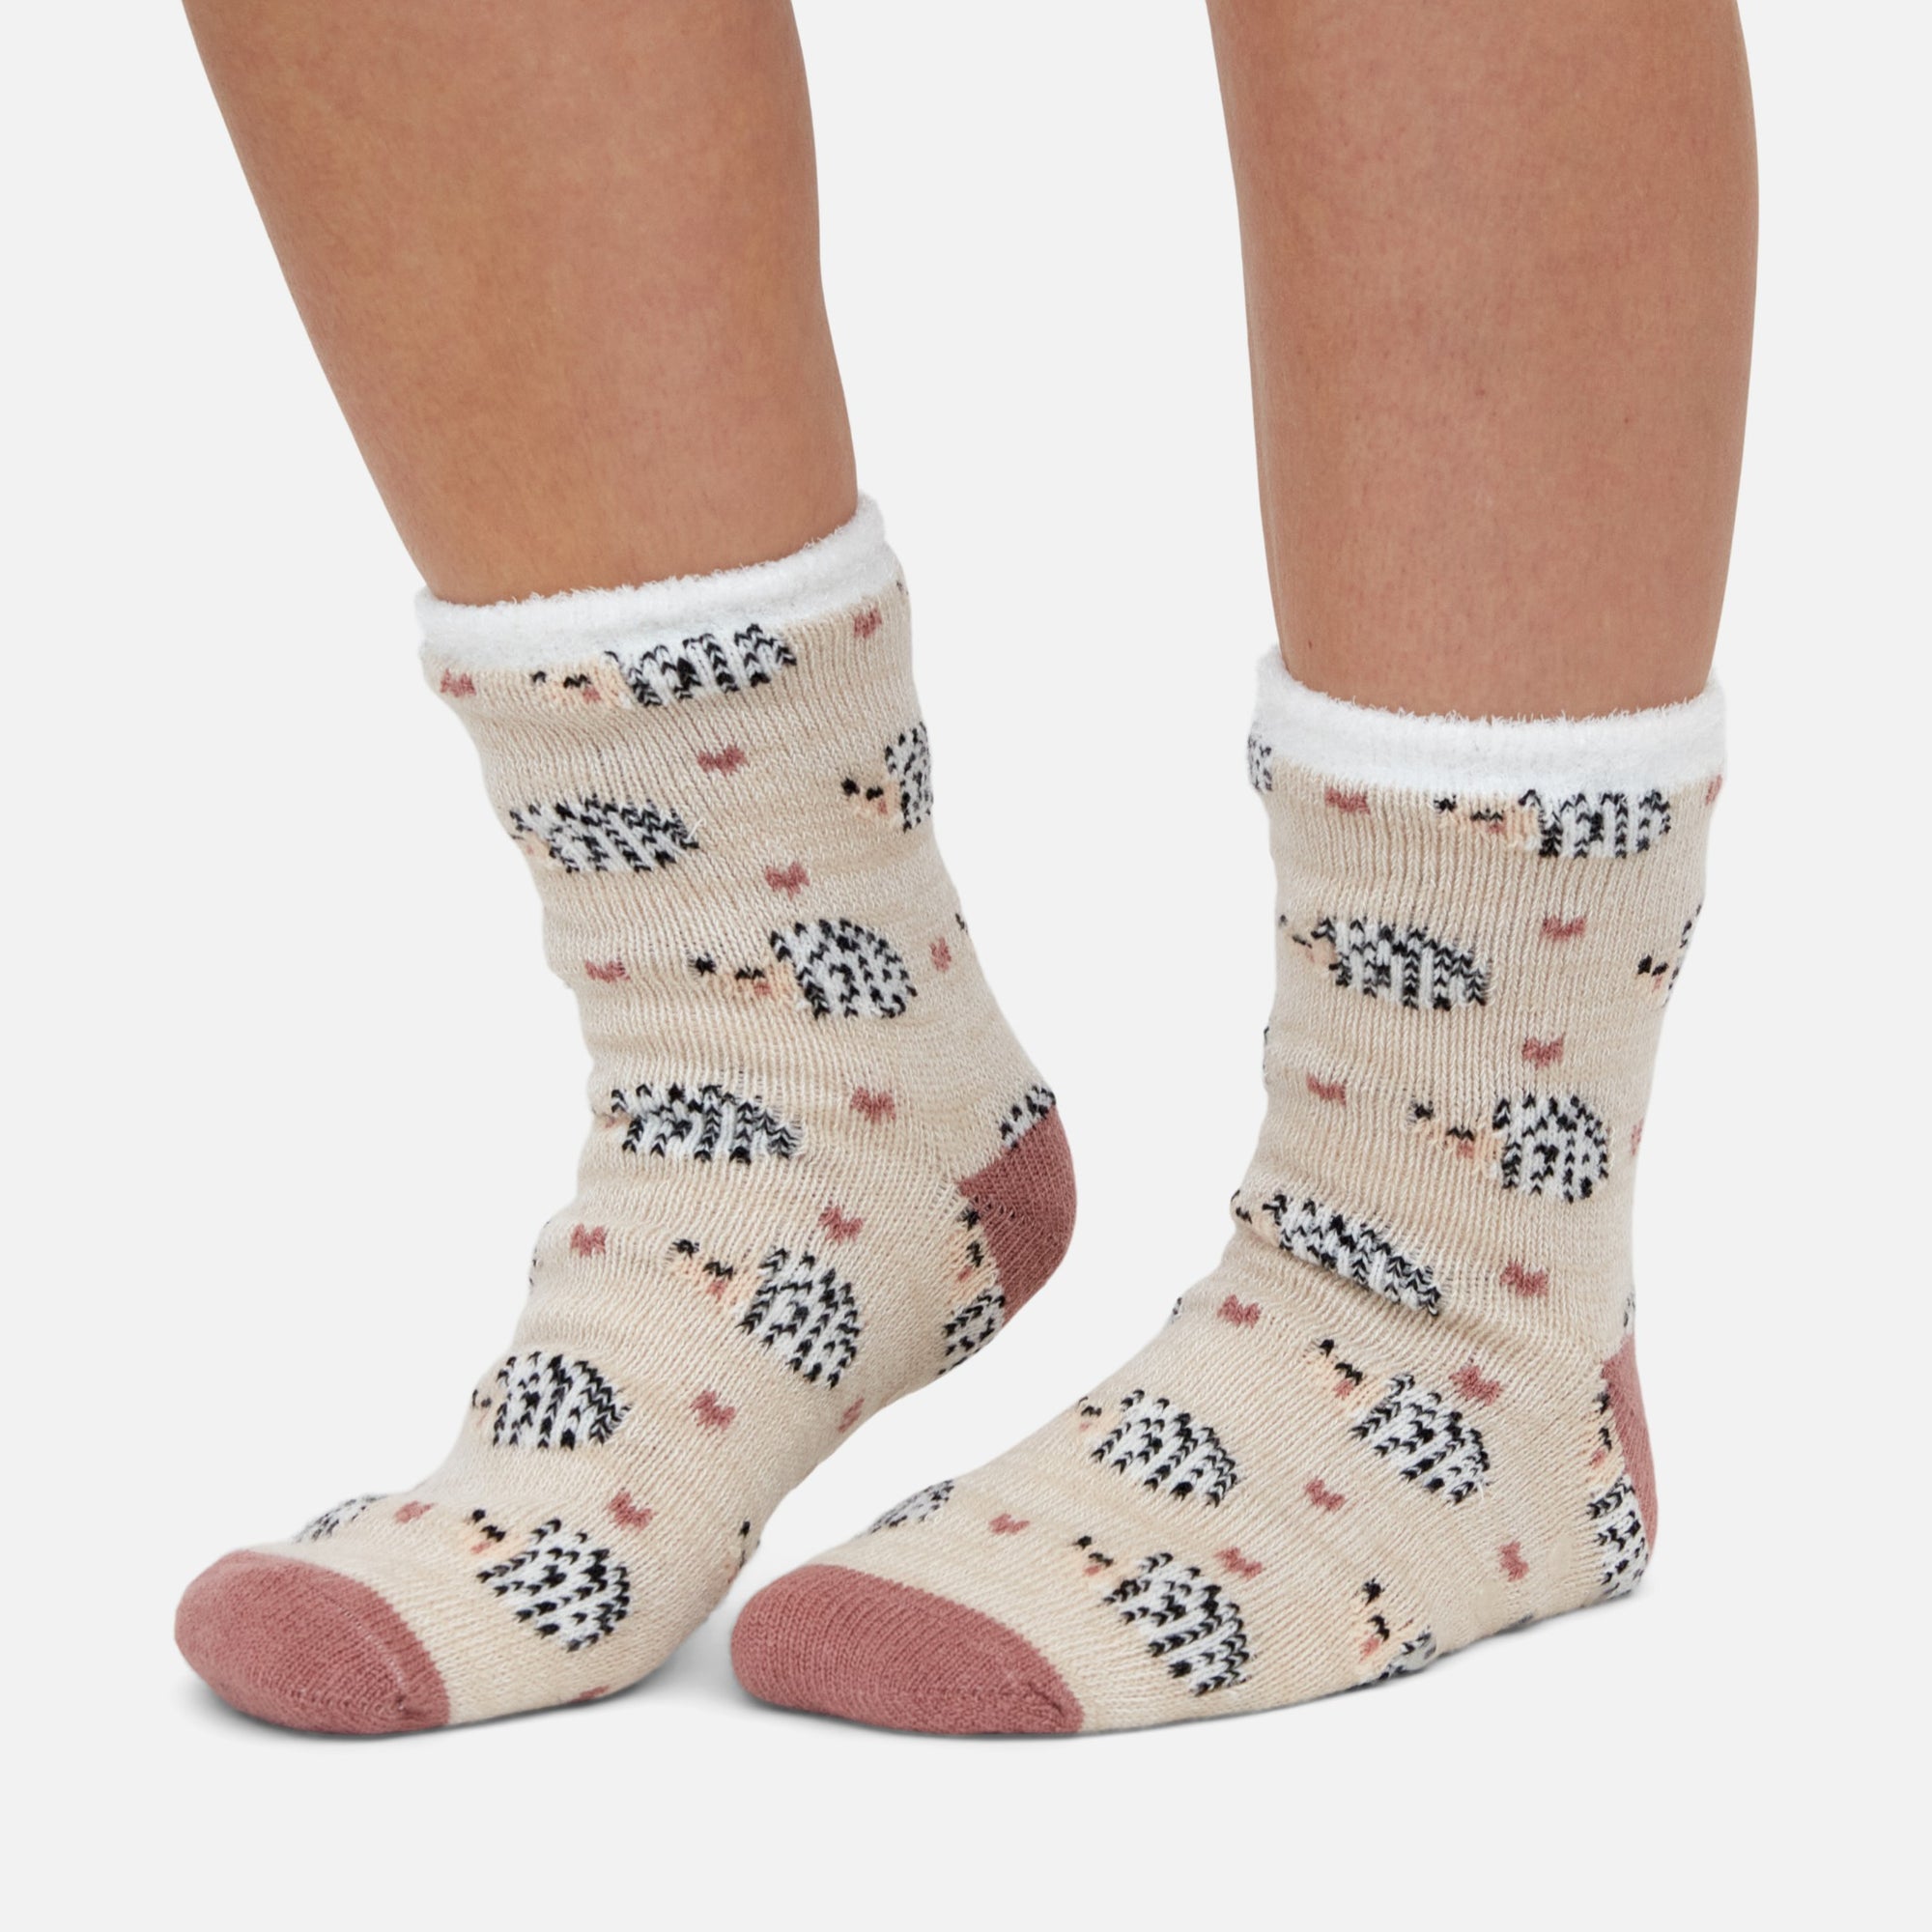 Cozy beige socks with hedgehogs